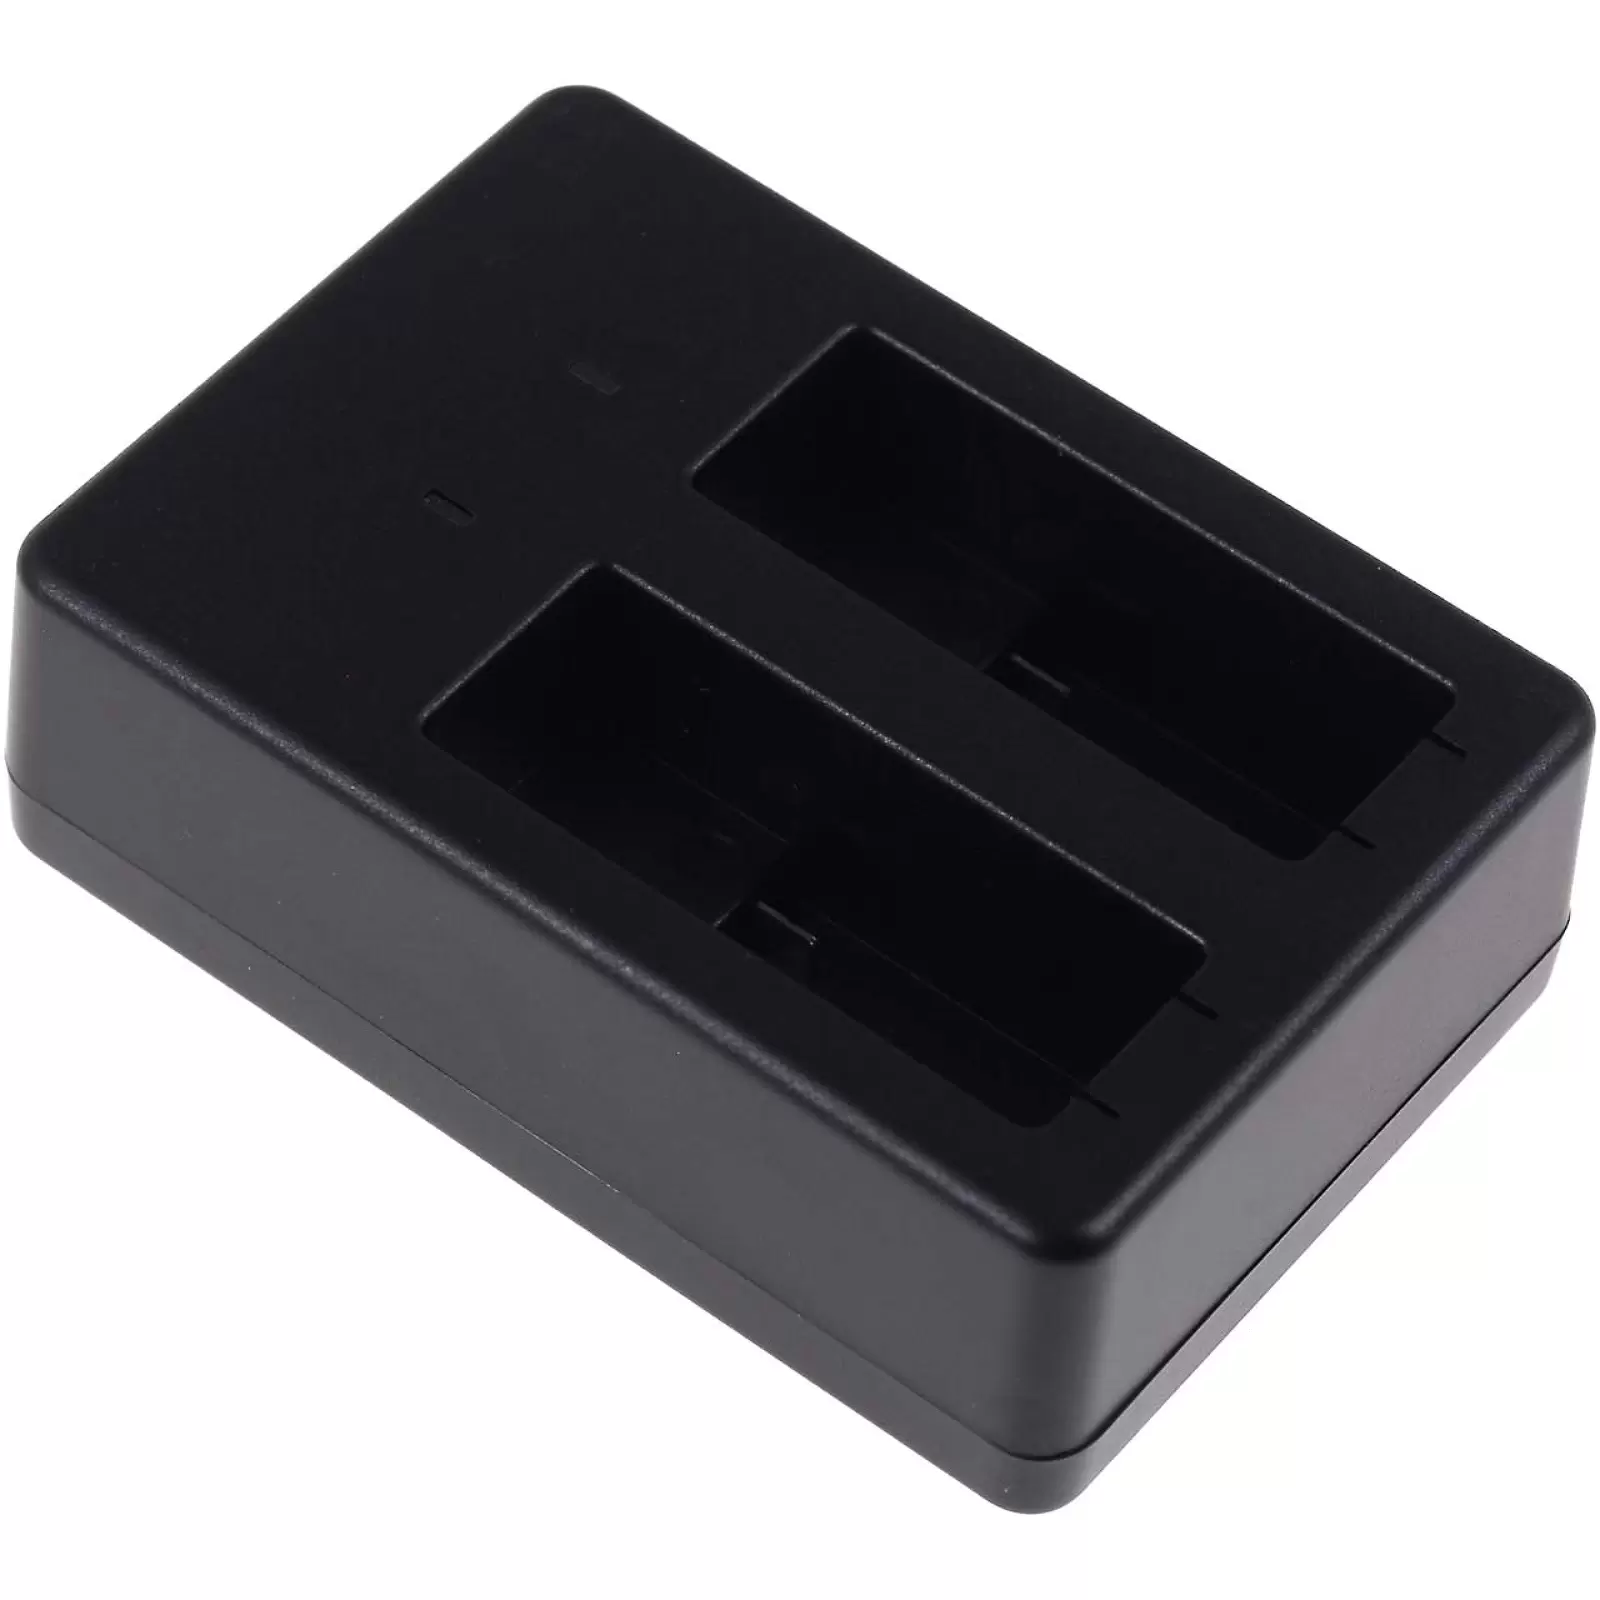 Ladegerät für 2 Stück GoPro Hero 5 Akkus / Ladertyp AHDBT-501 inkl. Micro USB Kabel